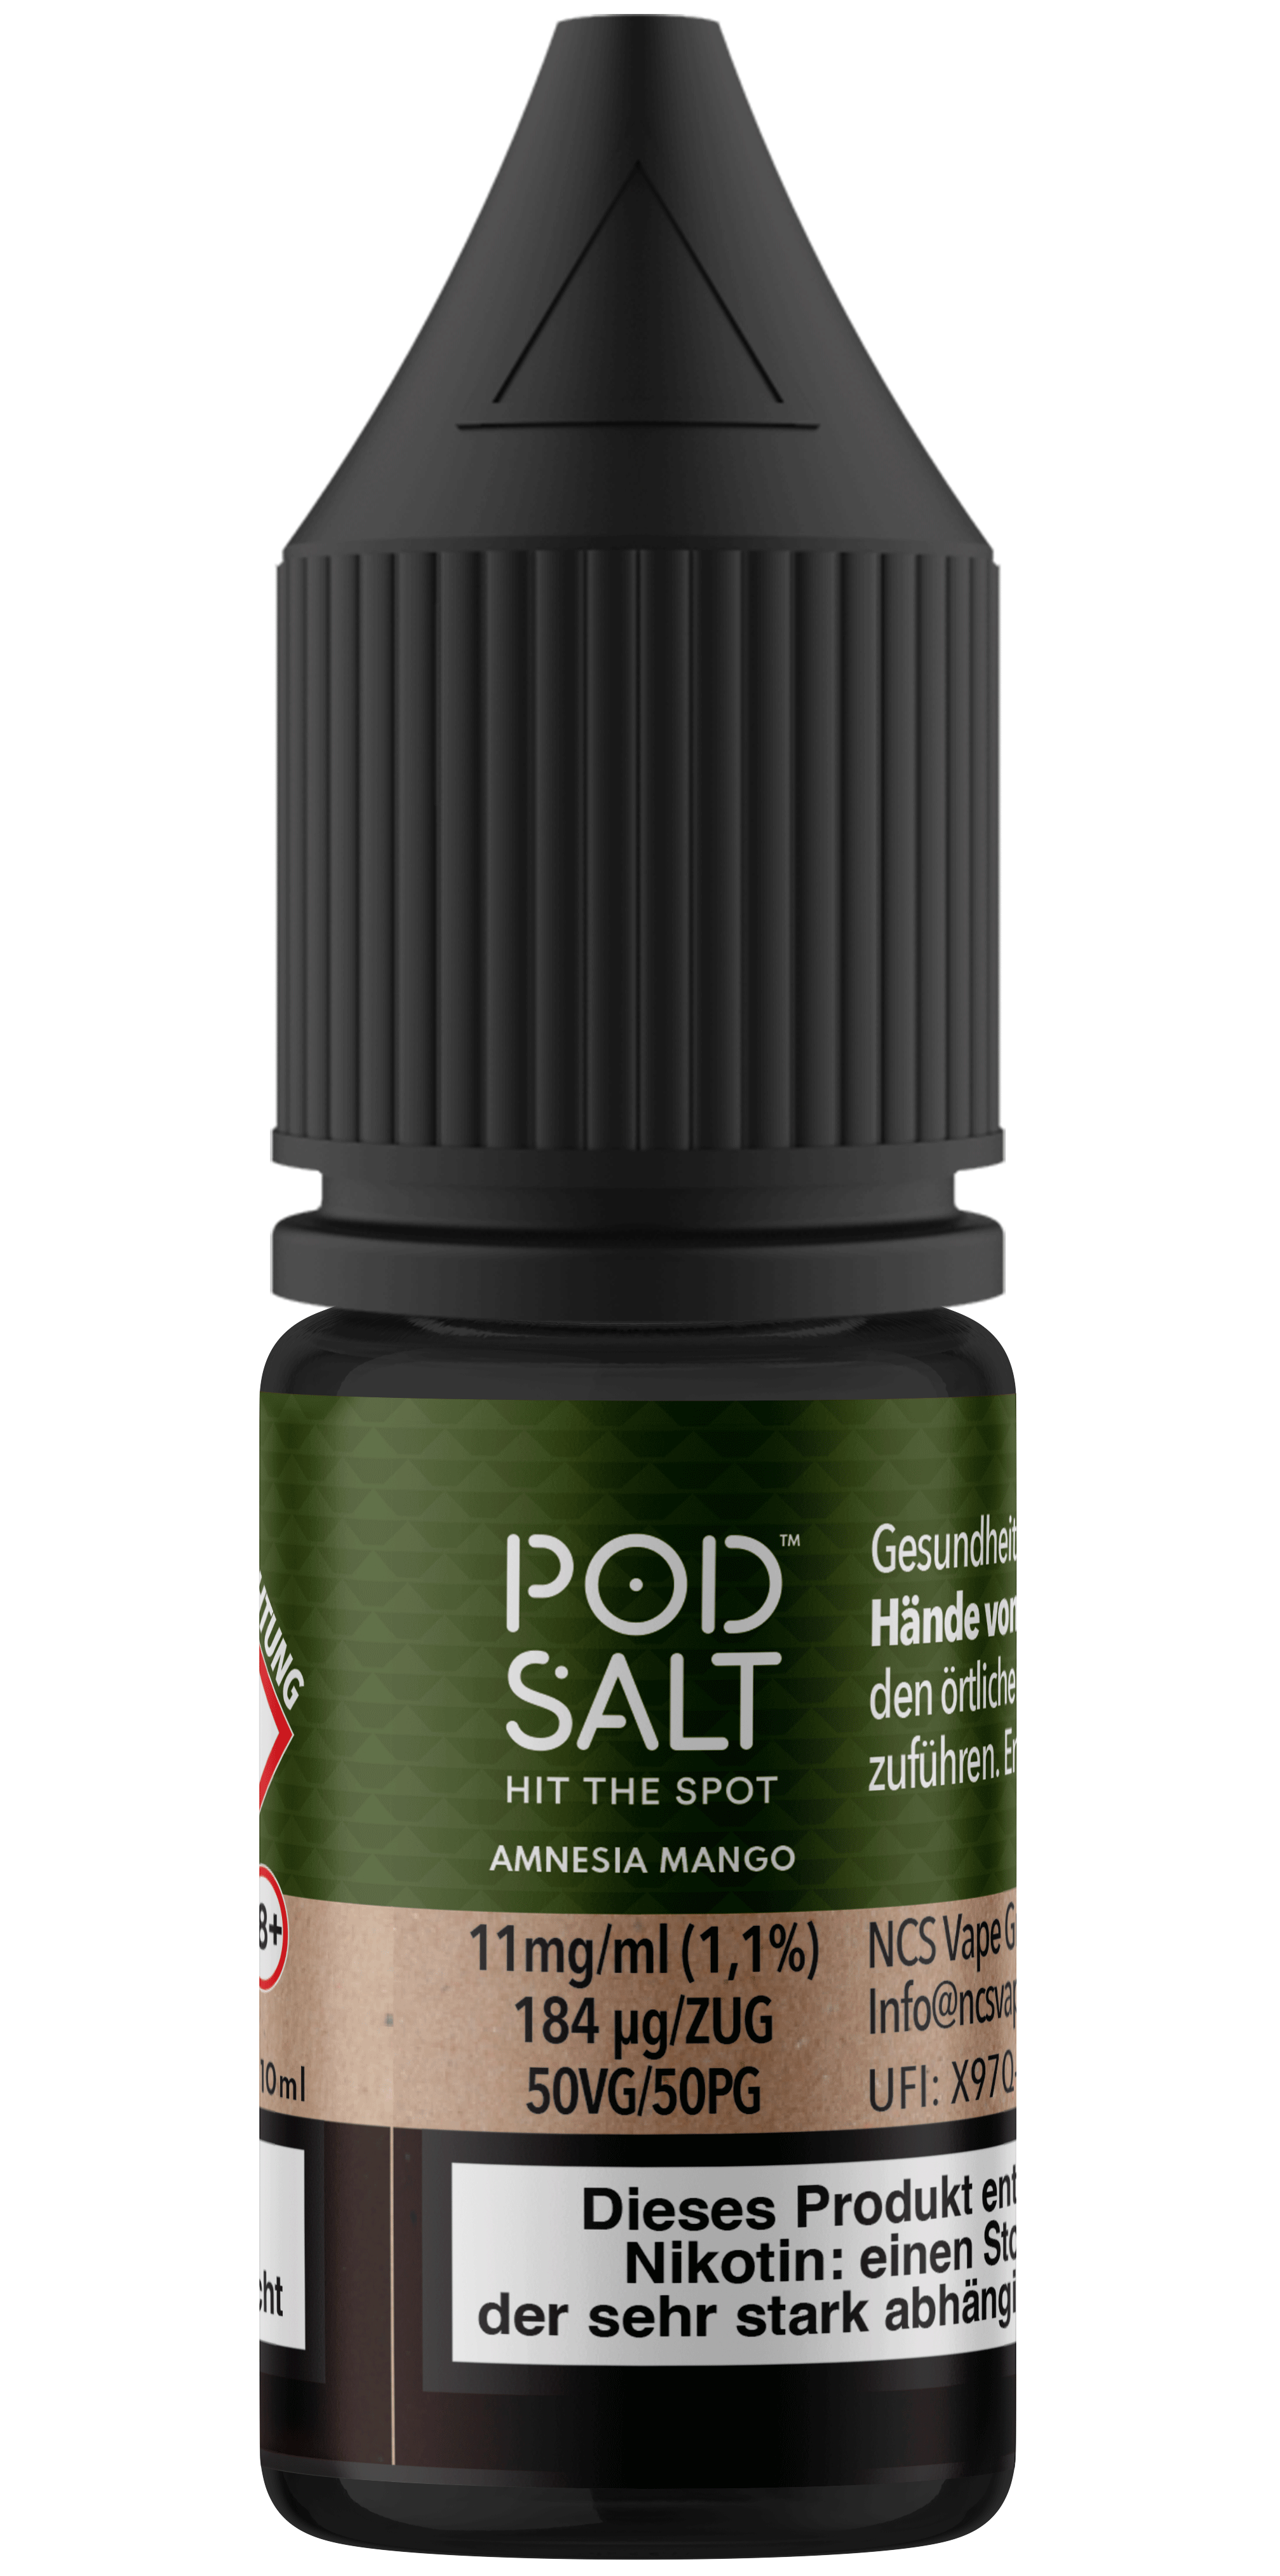 Pod Salt Fusion - Amnesia Mango 10 ml